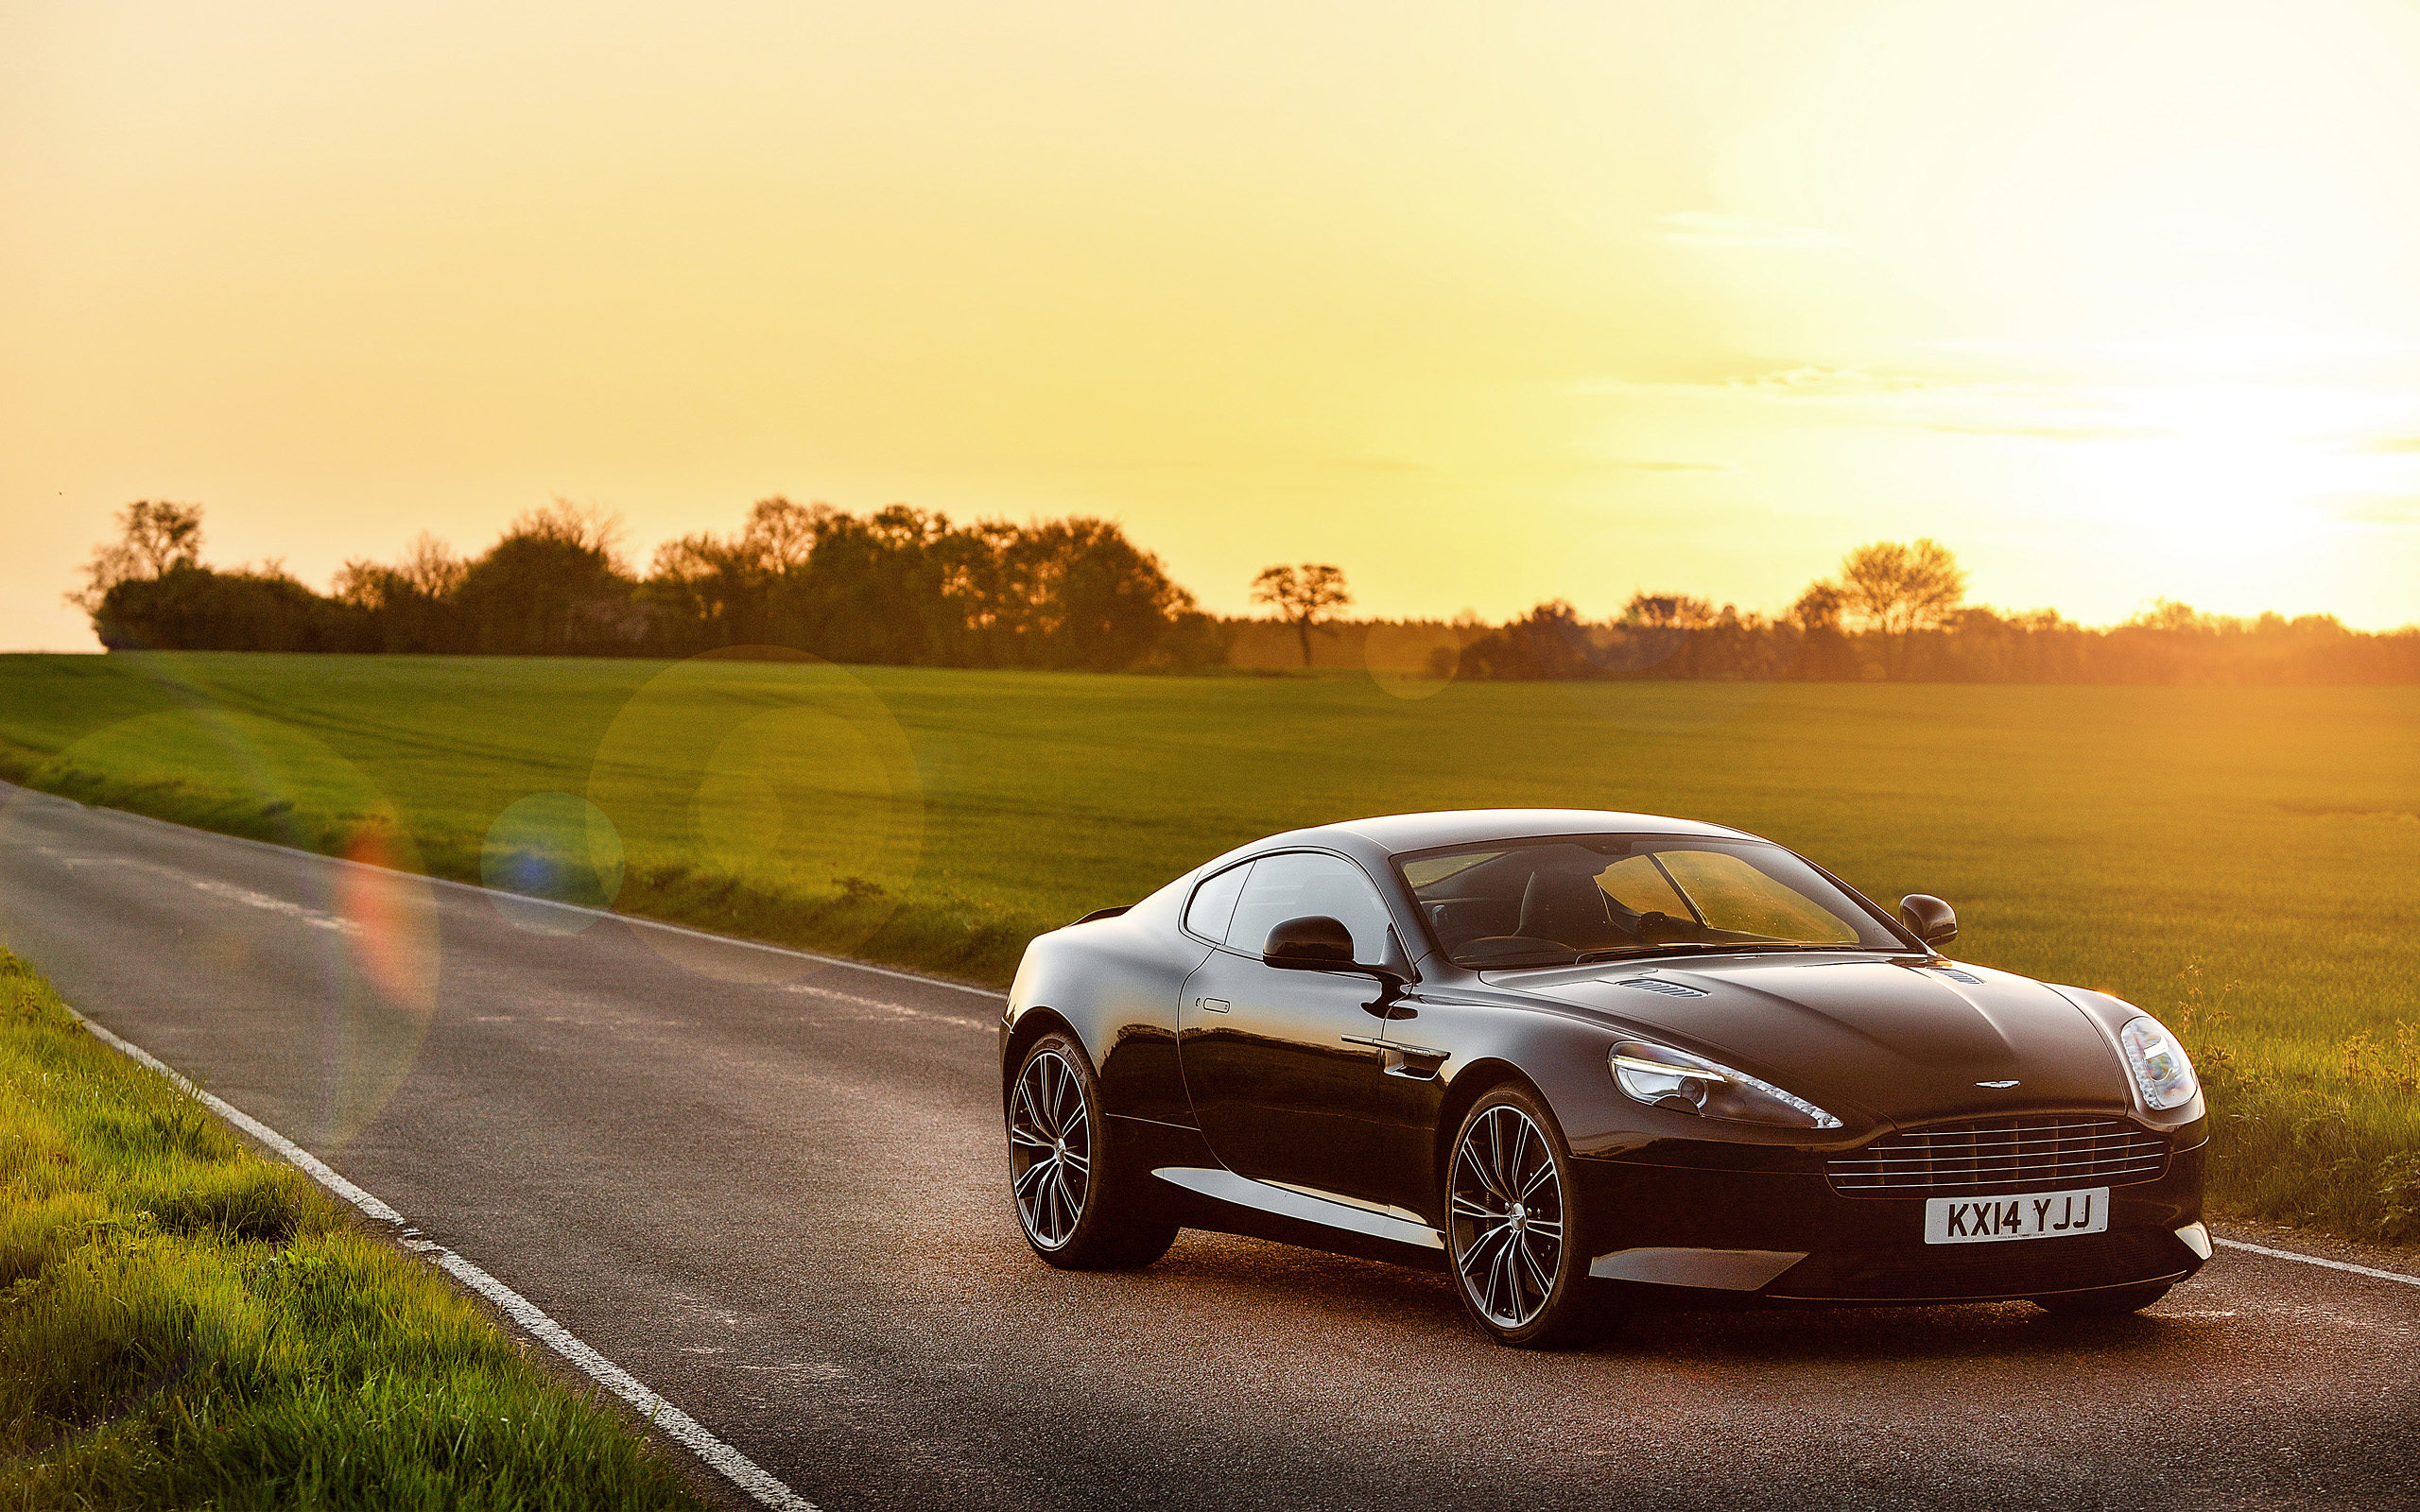 Breathtaking Beauty: The Aston Martin DB9 Carbon Edition